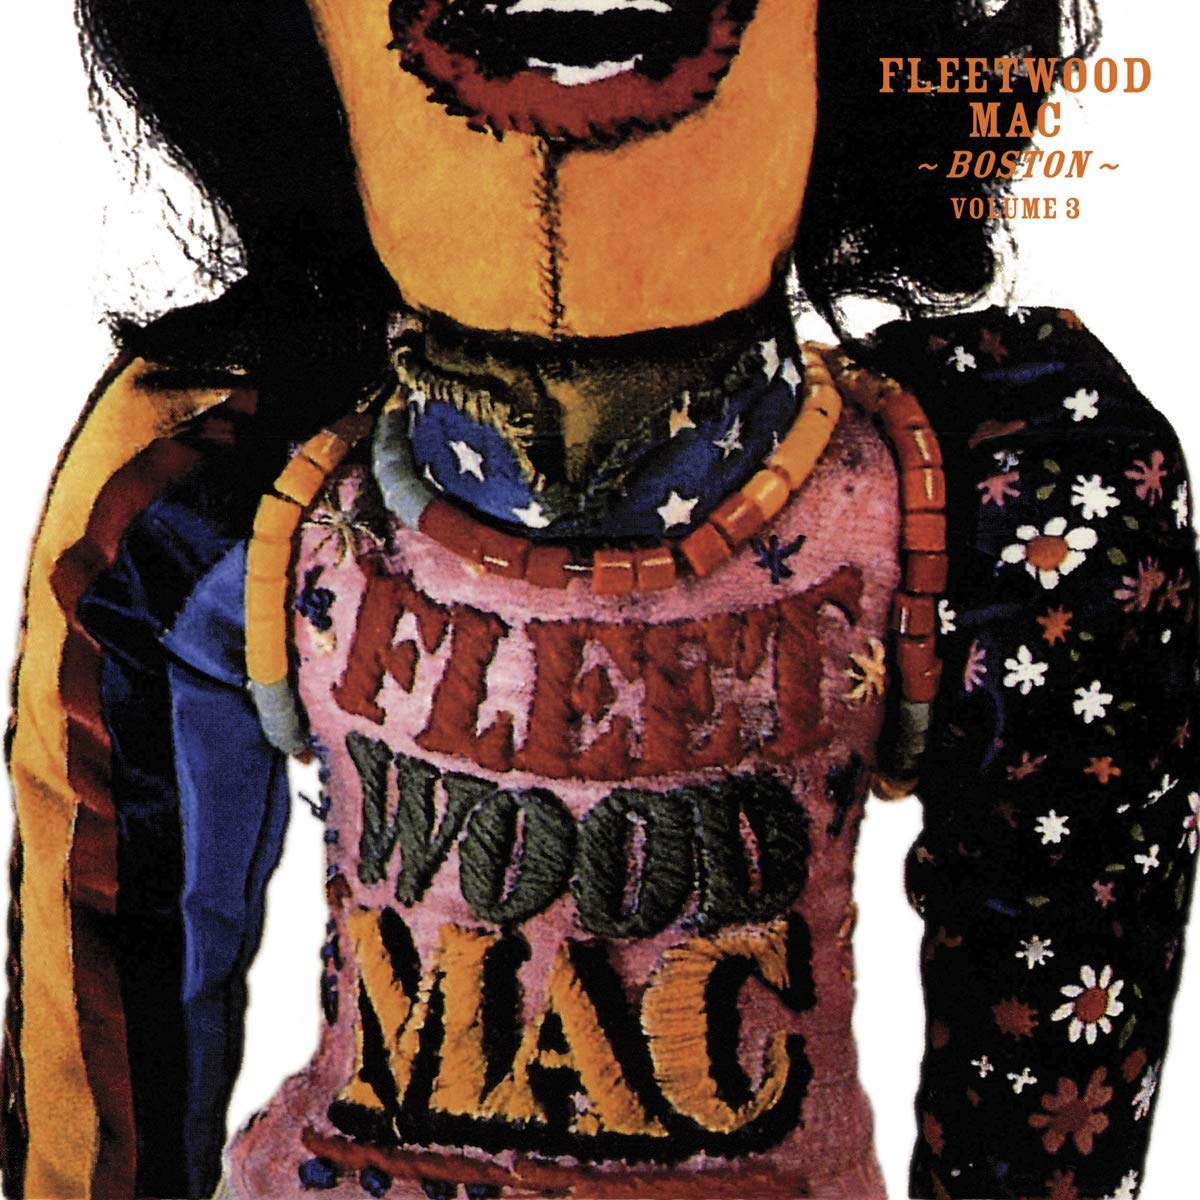 Fleetwood Mac Boston Volume 3